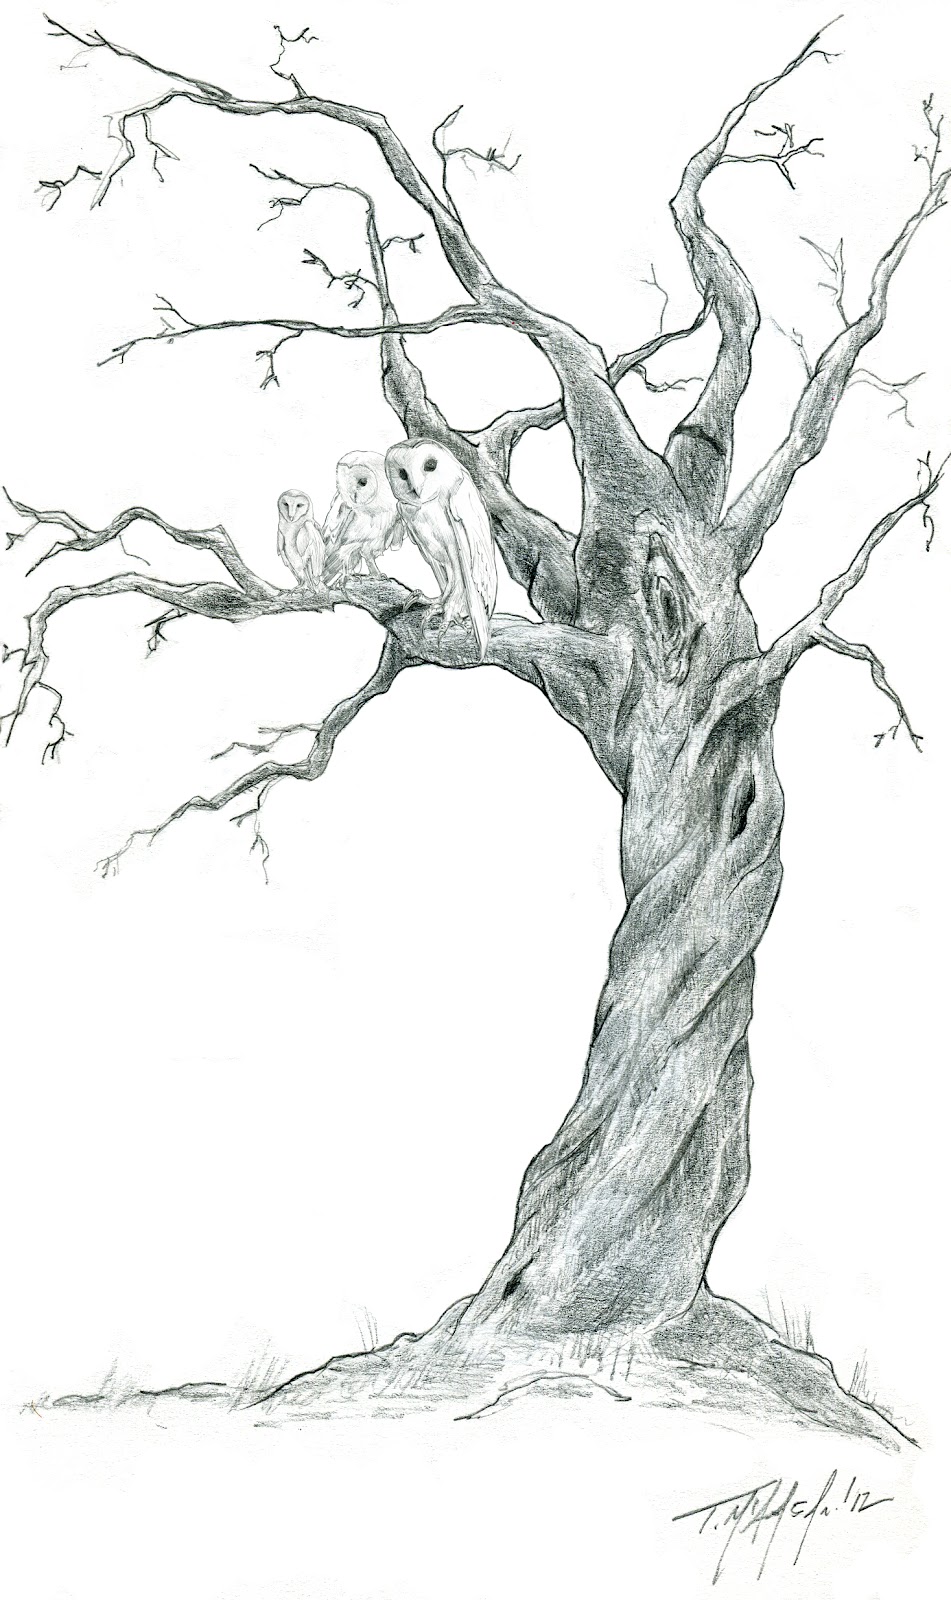 Concept to Creation: Rowan tree sketch